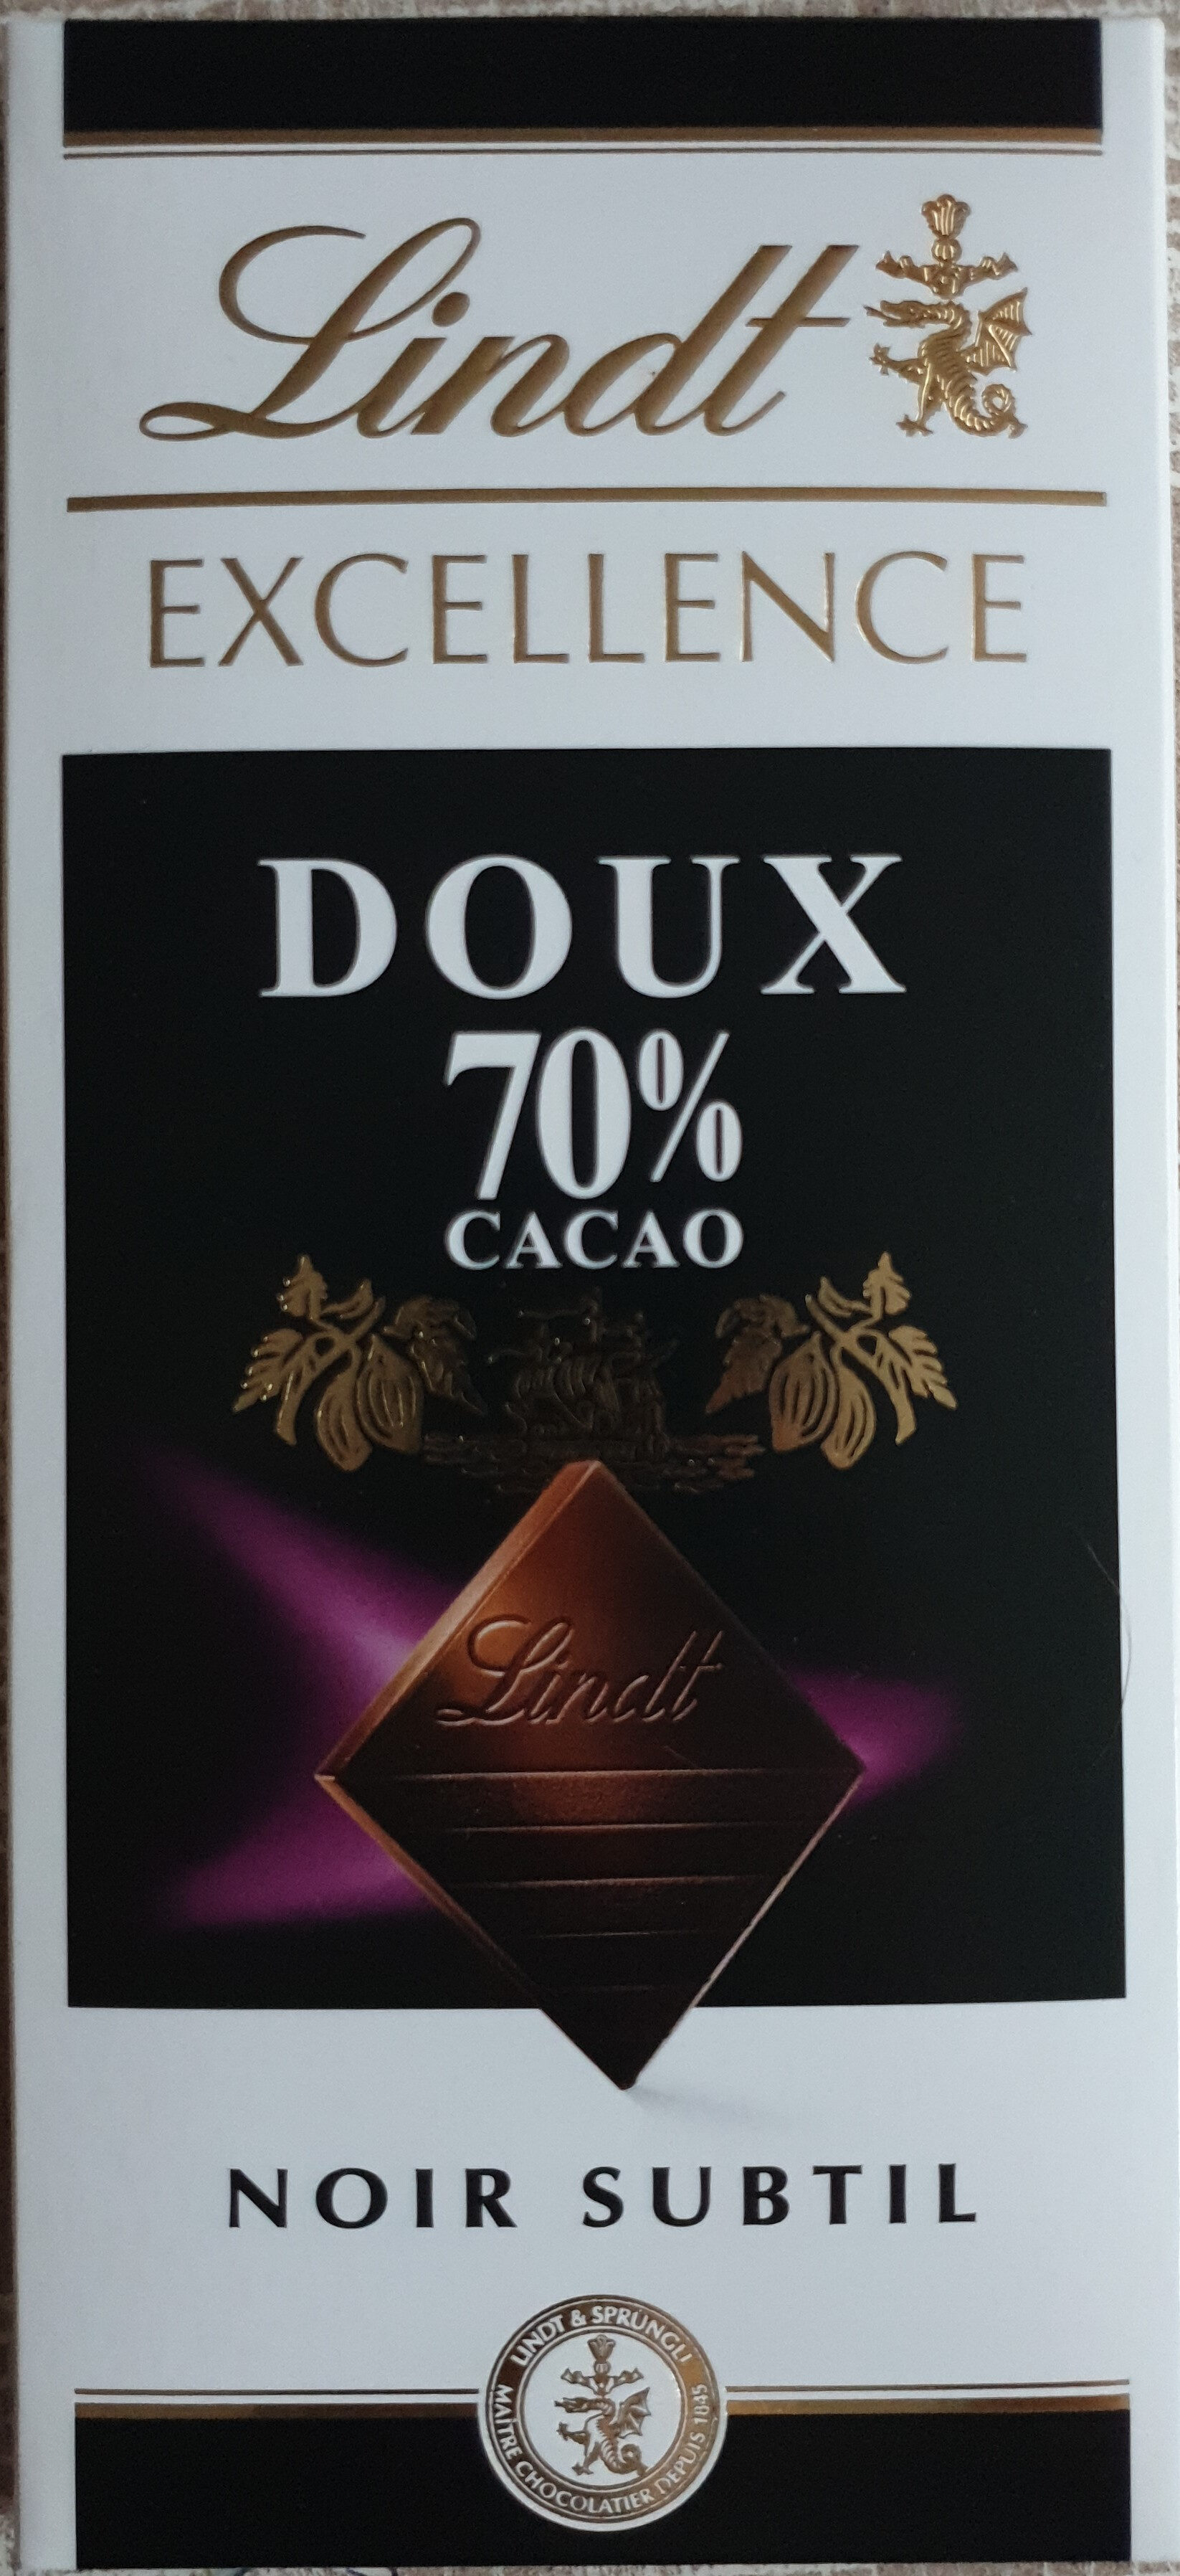 Schokolade 70%, Cacao - Producte - en